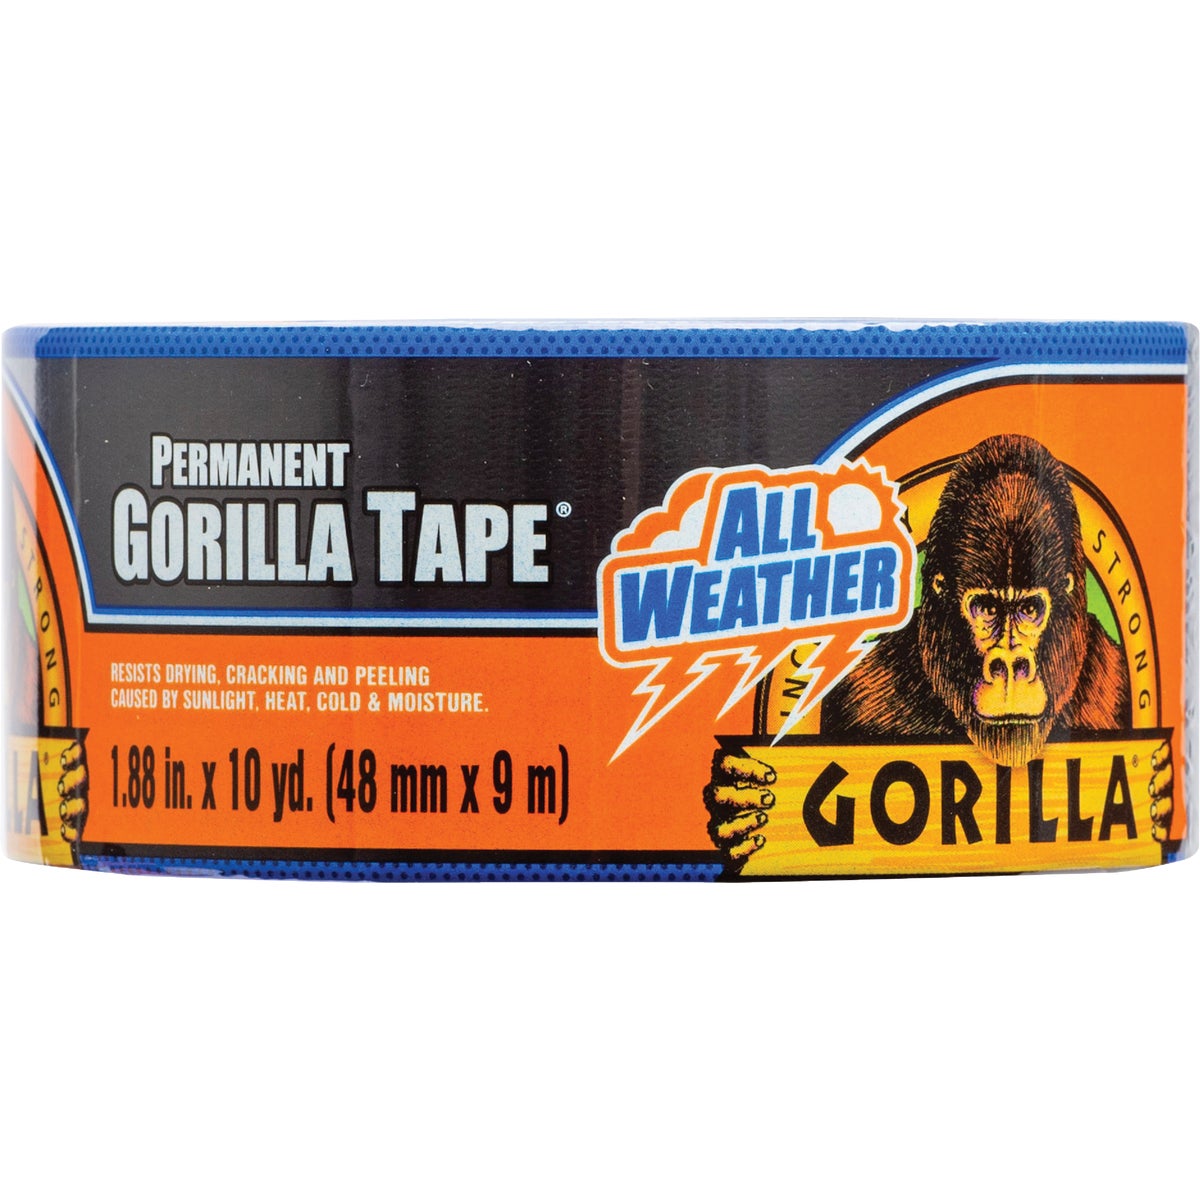 Gorilla 1.88 In. x 10 Yd. All Weather Tape, Black